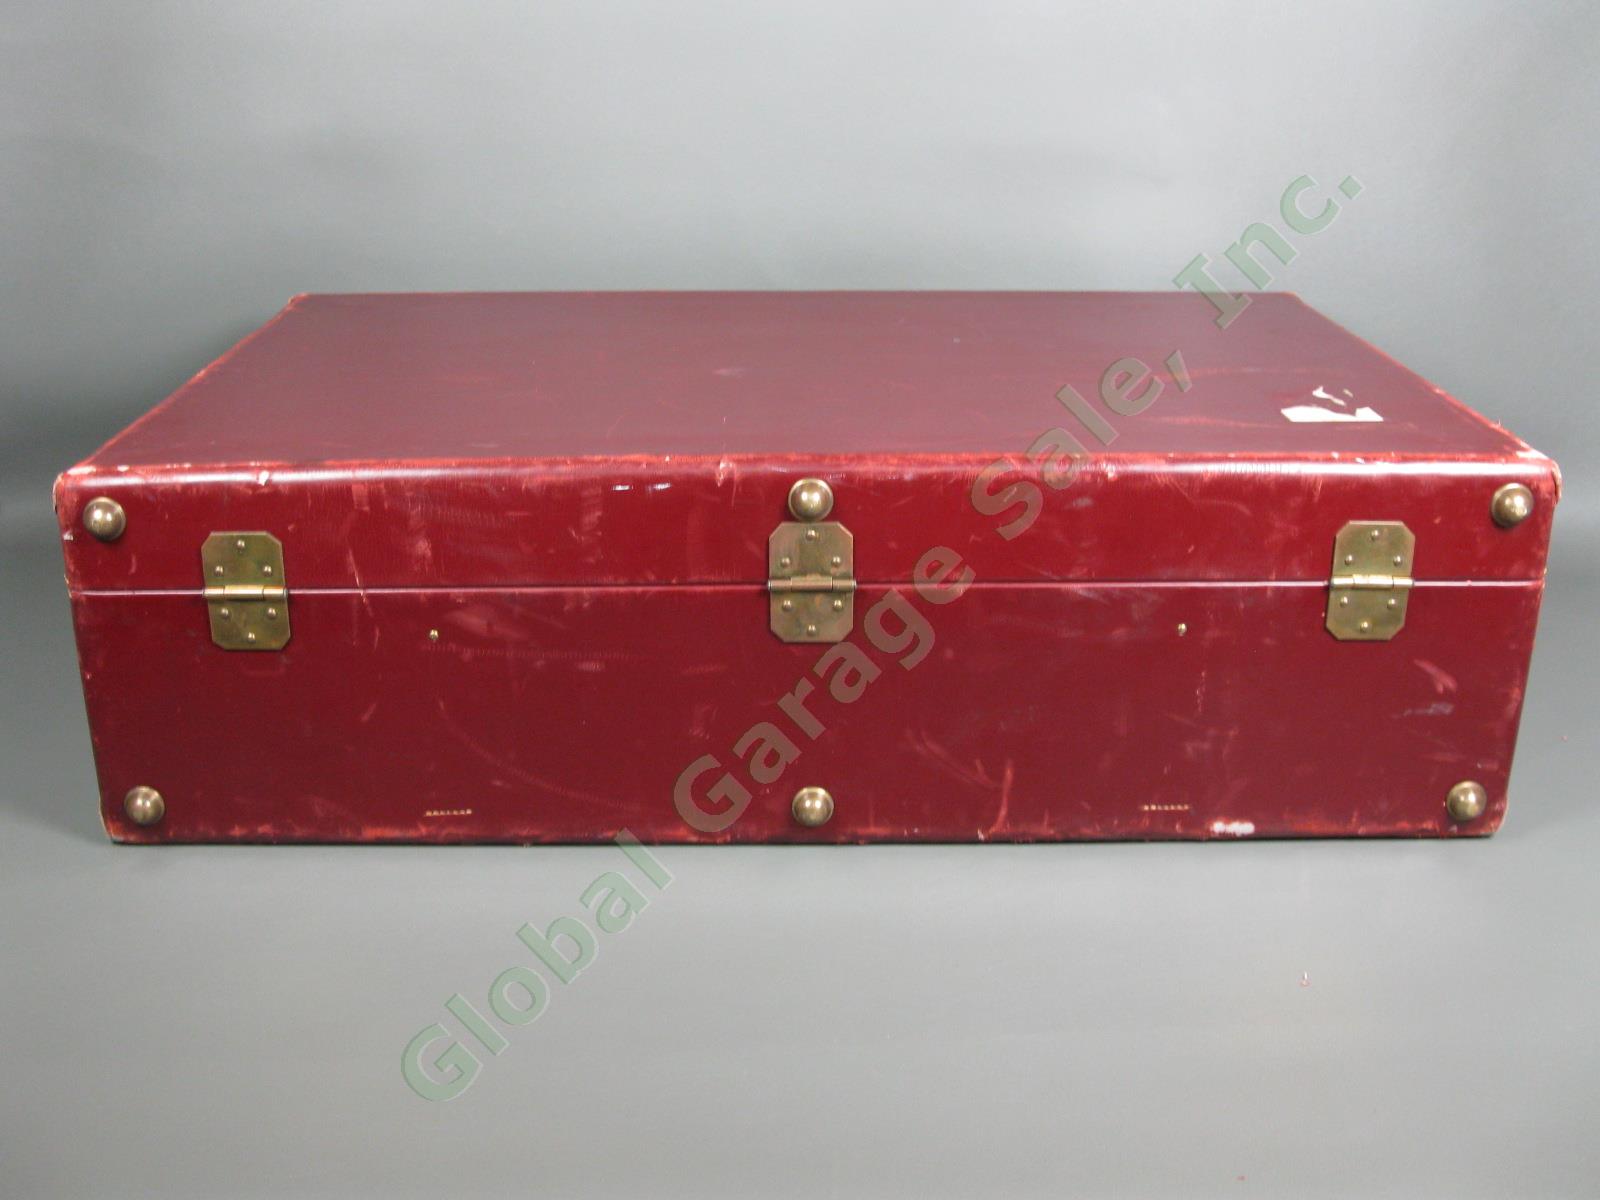 Vintage Hermes Paris Red Leather Travel Luggage Suitcase Original Brass w/ Keys 5